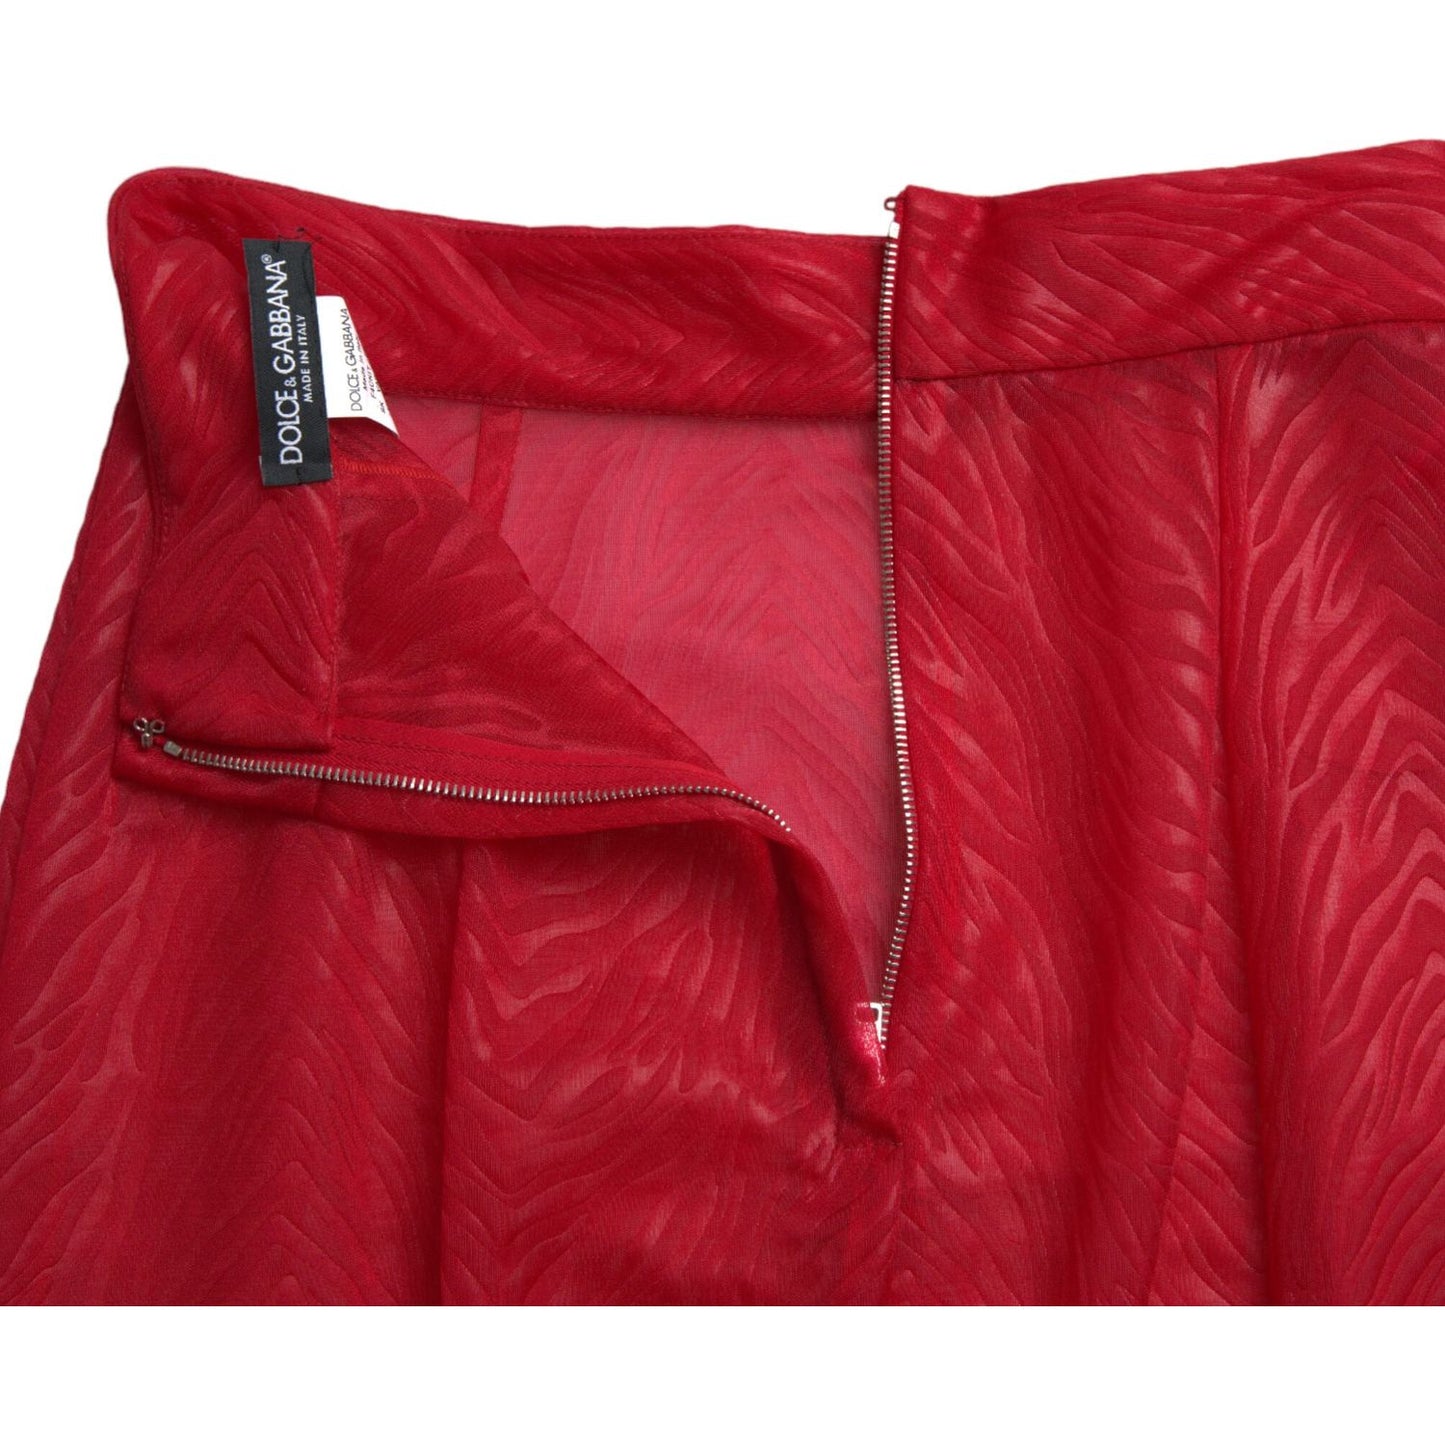 Dolce & Gabbana Chic Red High Waist Sheer Midi Skirt red-sheer-high-waist-pencil-cut-midi-skirt 465A1826-bg-scaled-c2ca276d-526.jpg